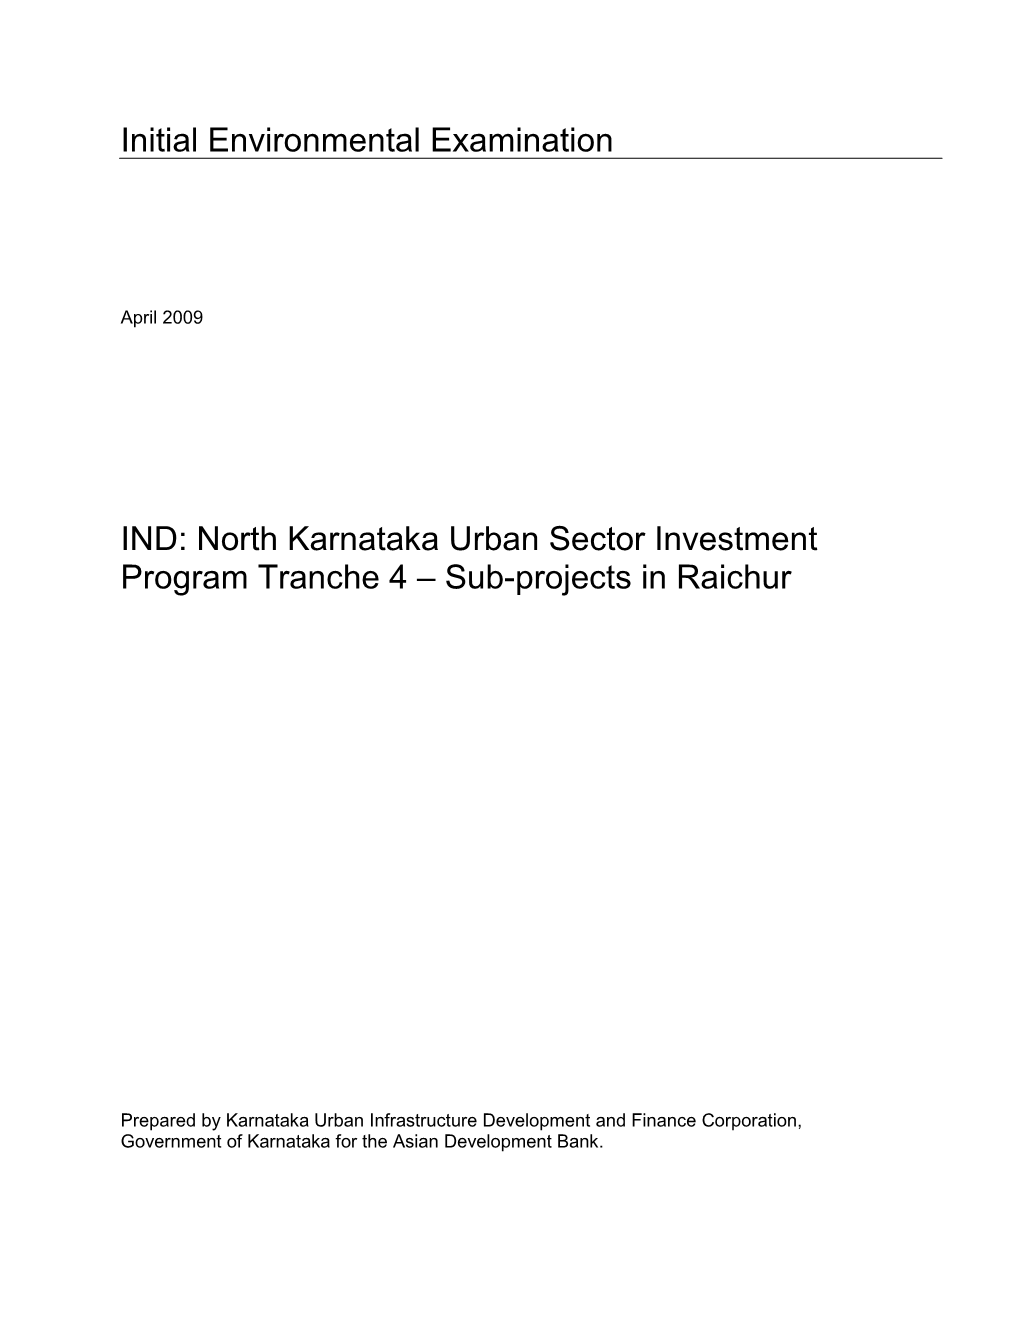 North Karnataka Urban Sector Investment Program Tranche 4 – Sub-Projects in Raichur